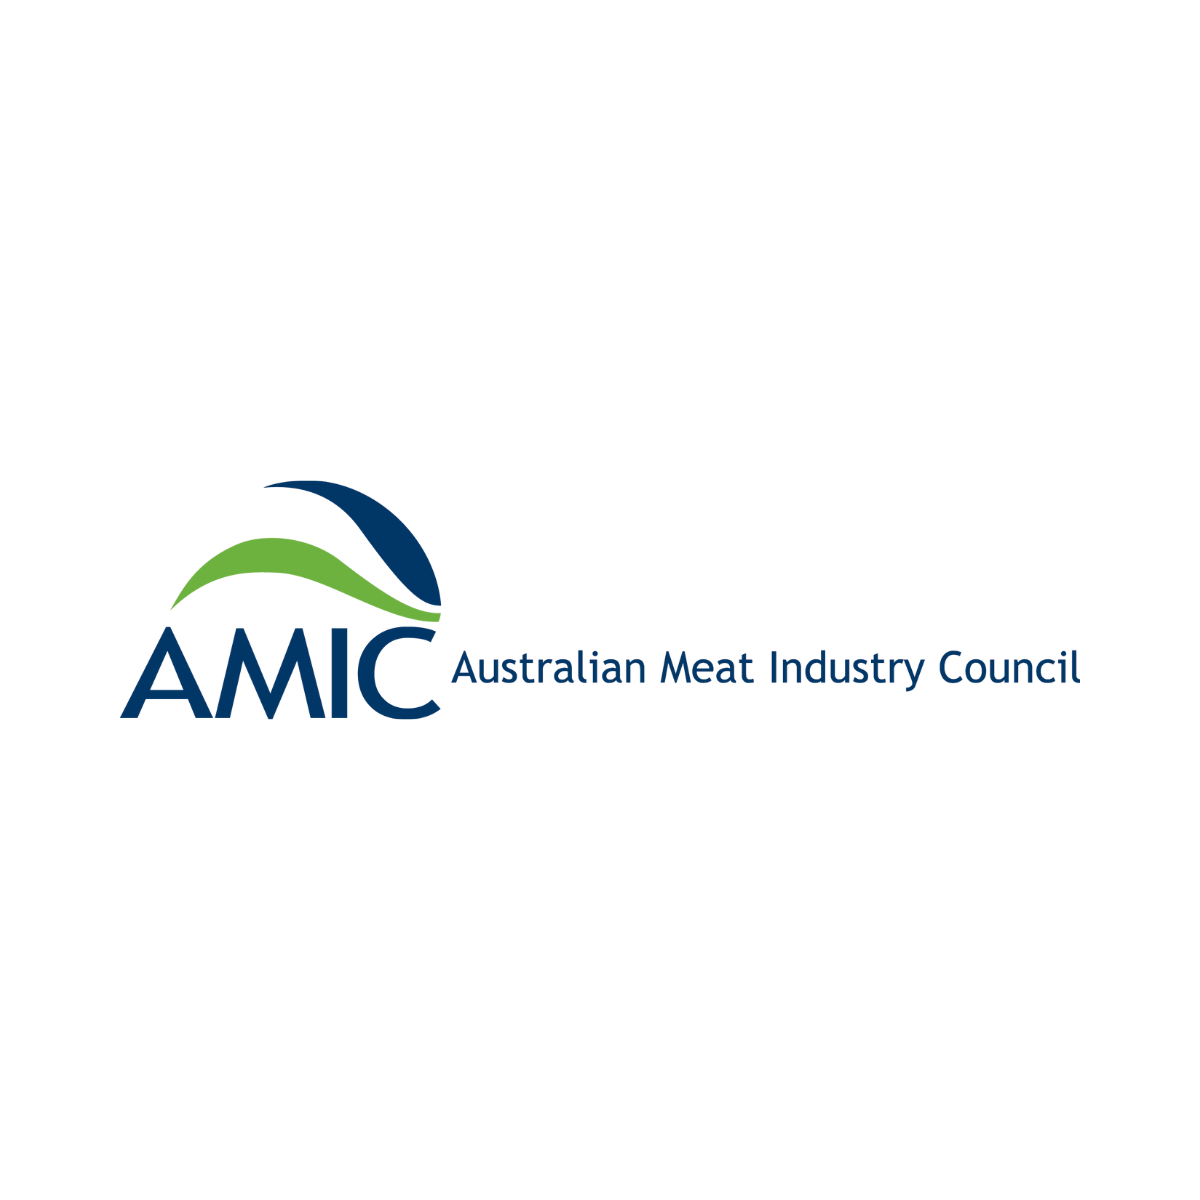 Australian Meat Industry Council